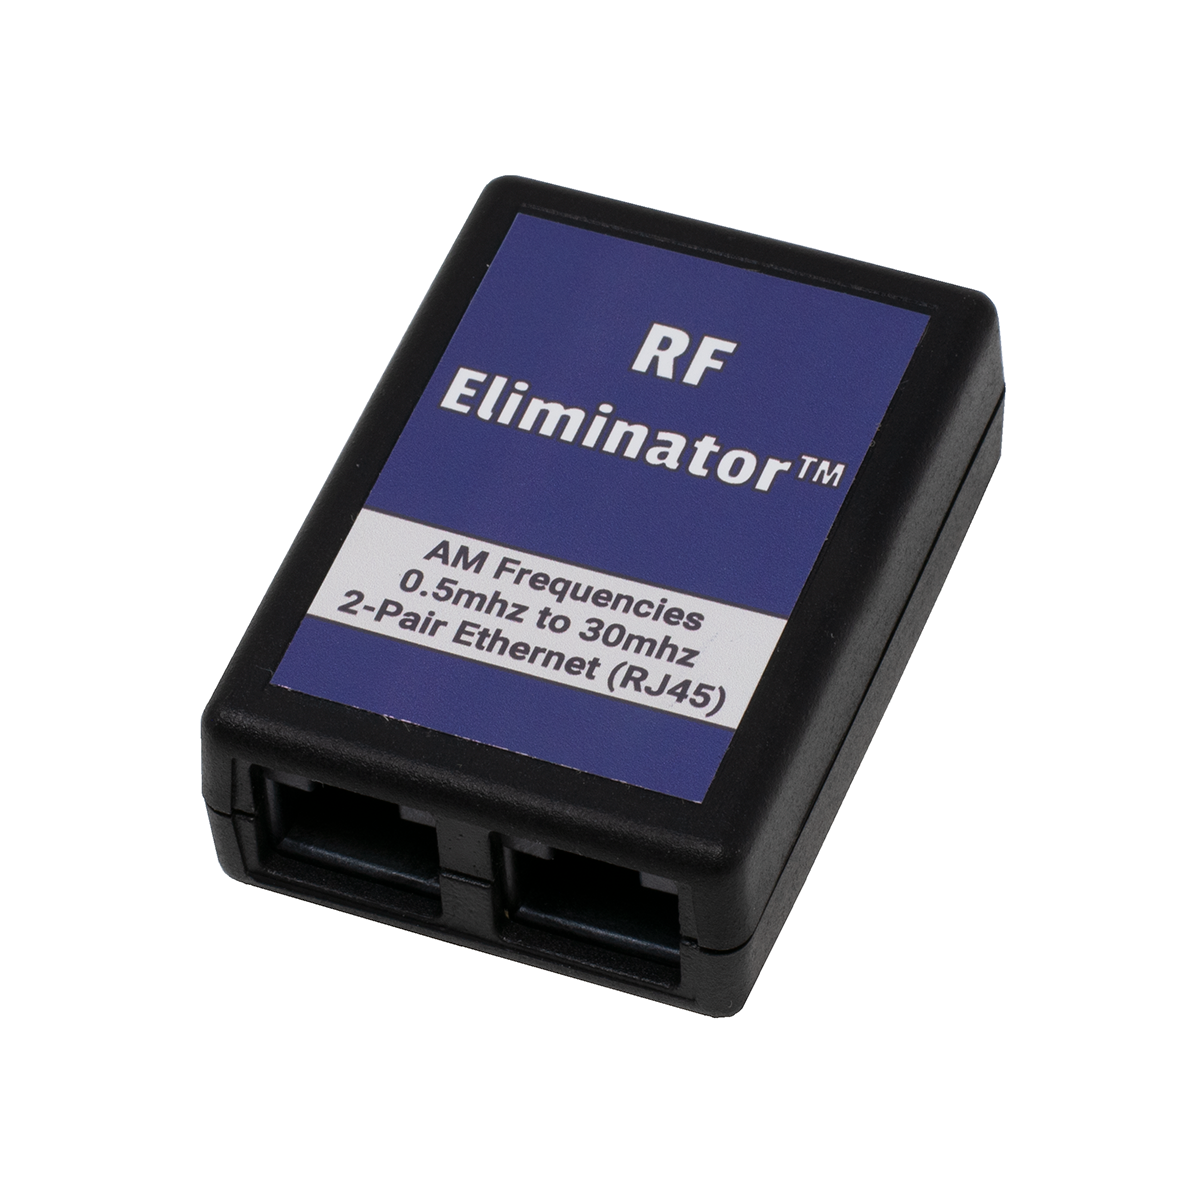 RF Eliminator - 2 Pair Ethernet - AM (Side View)